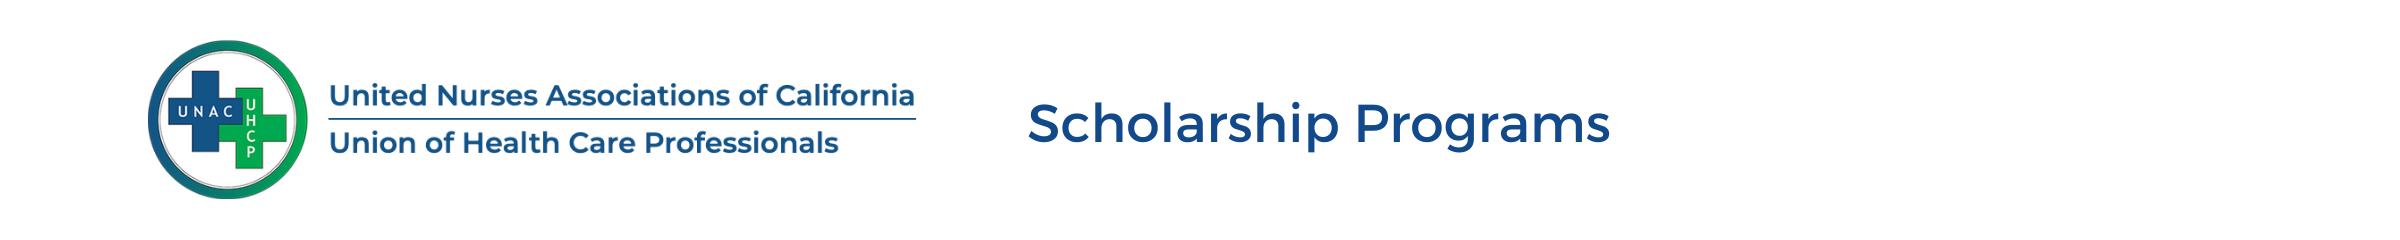 UNAC/UHCP Scholarship Programs logo